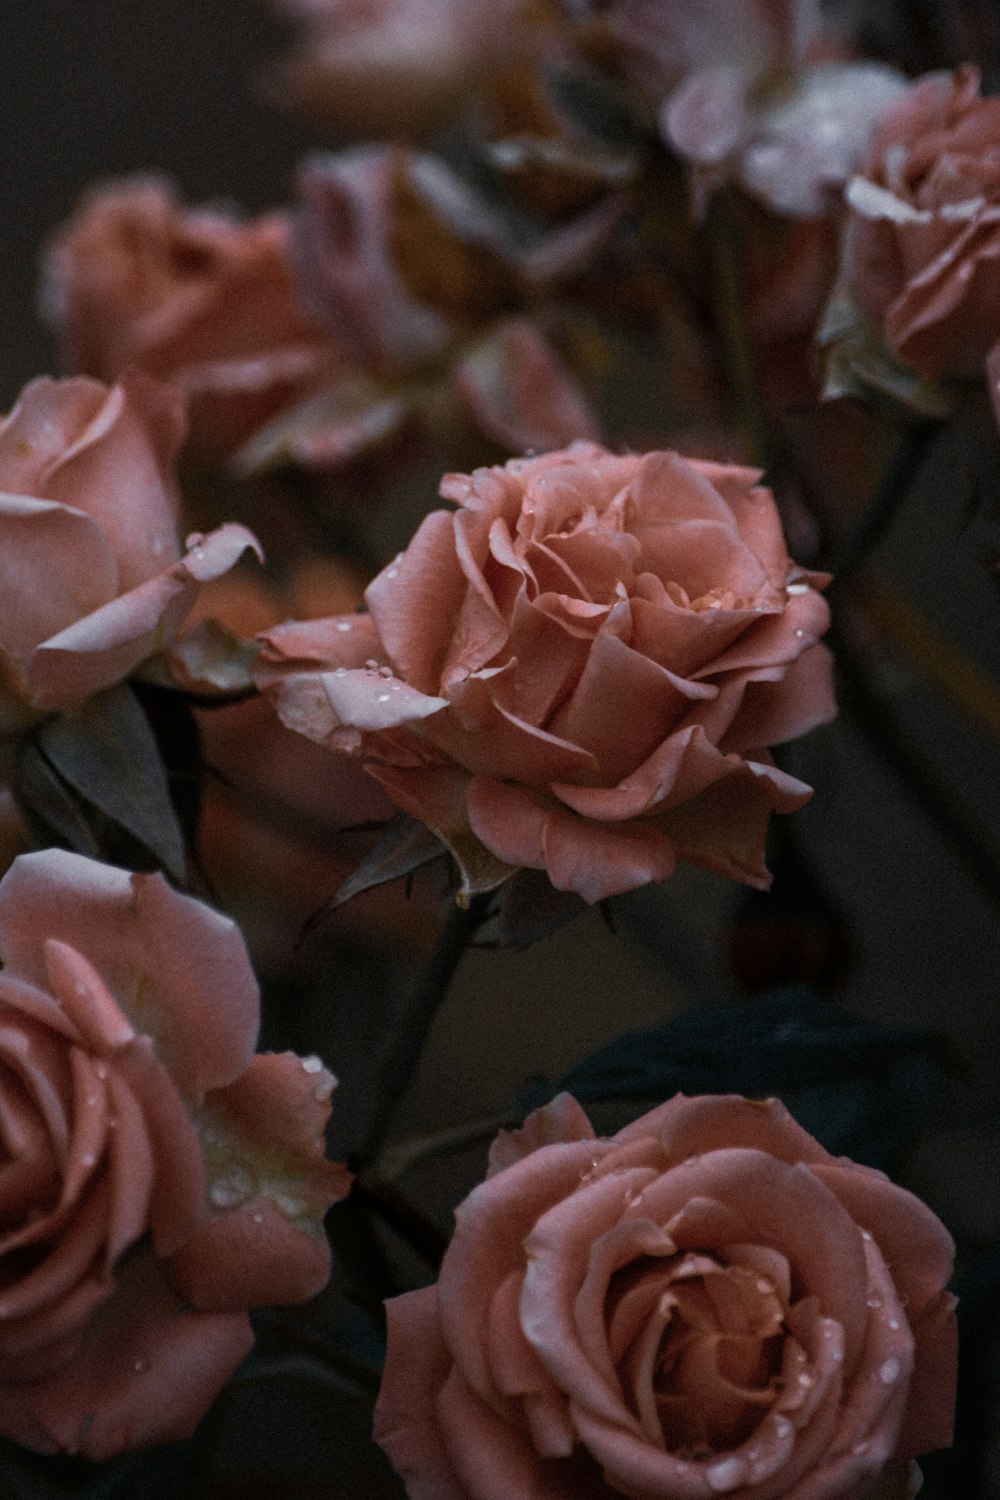 roses roses en gros plan photographie